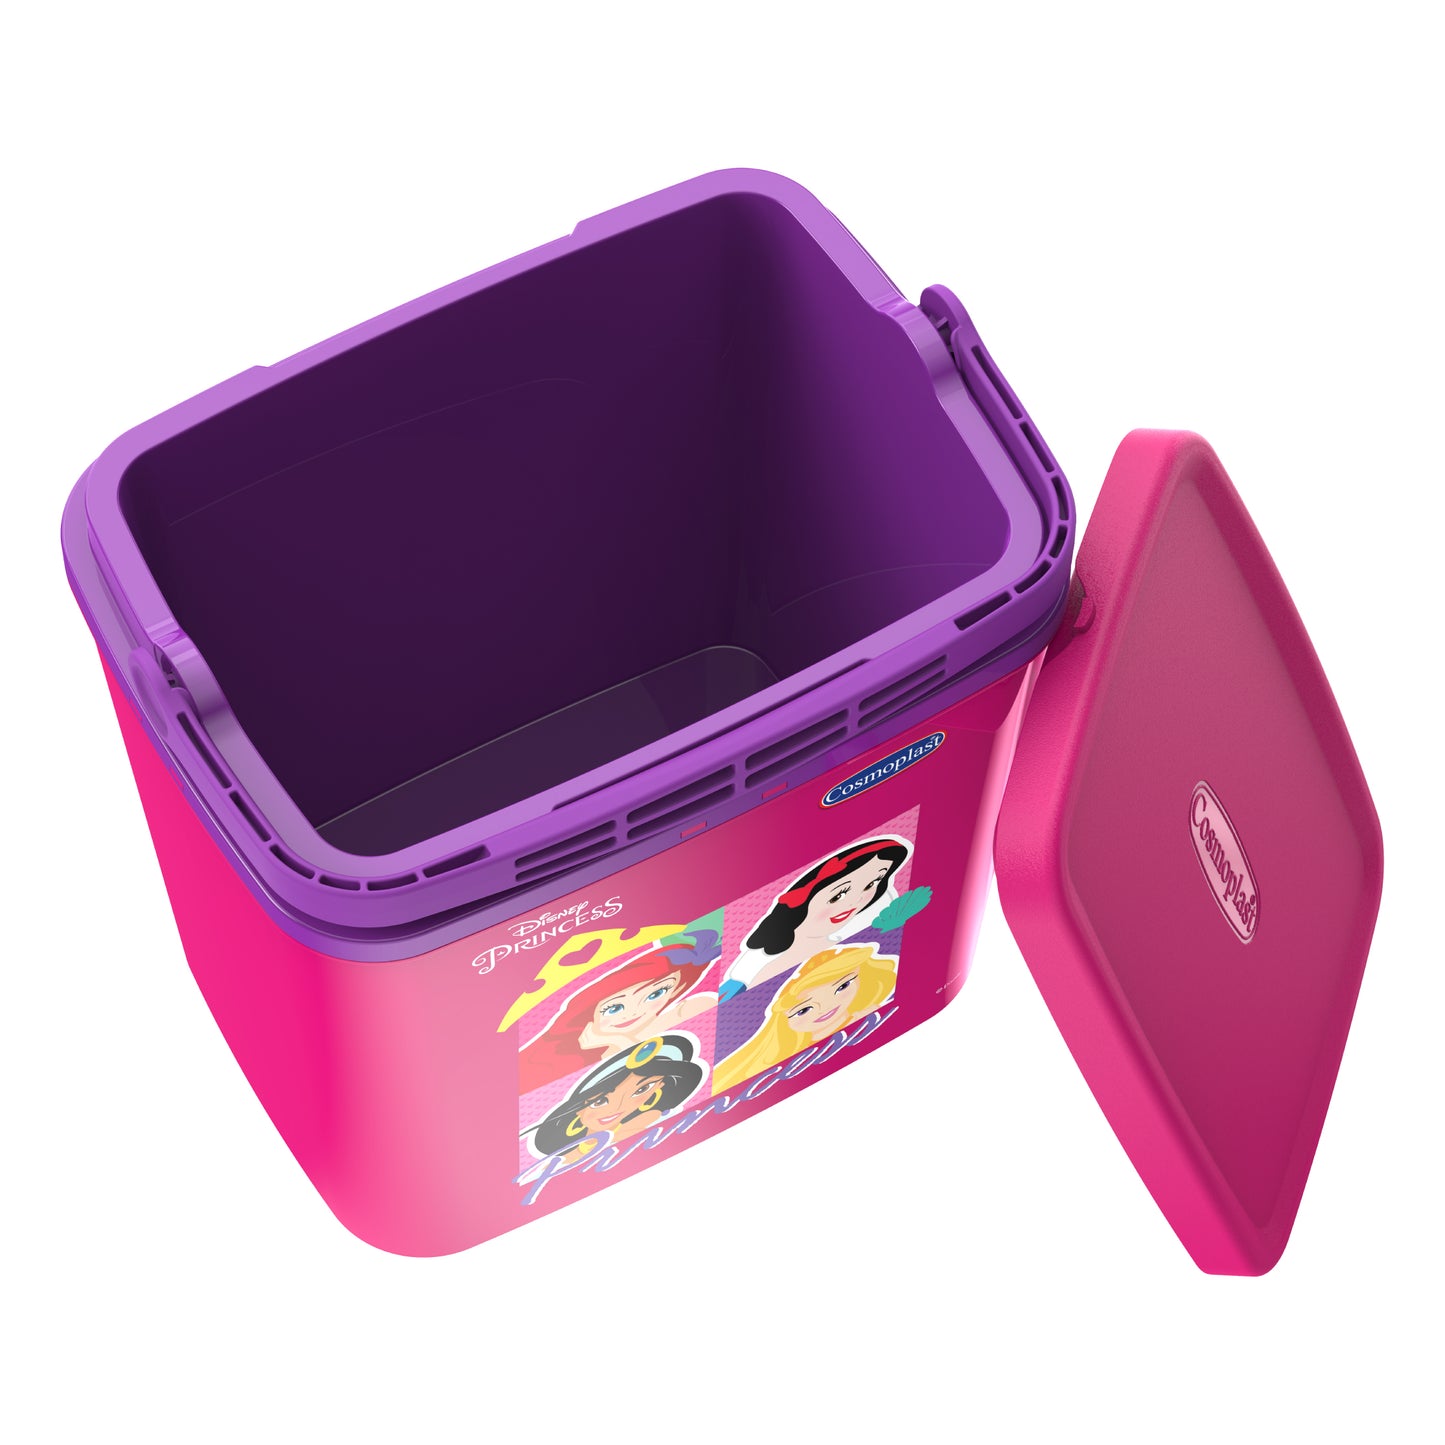 Cosmoplast Disney Princess ChillBox Lunch Box Cooler Icebox 4 Liters 